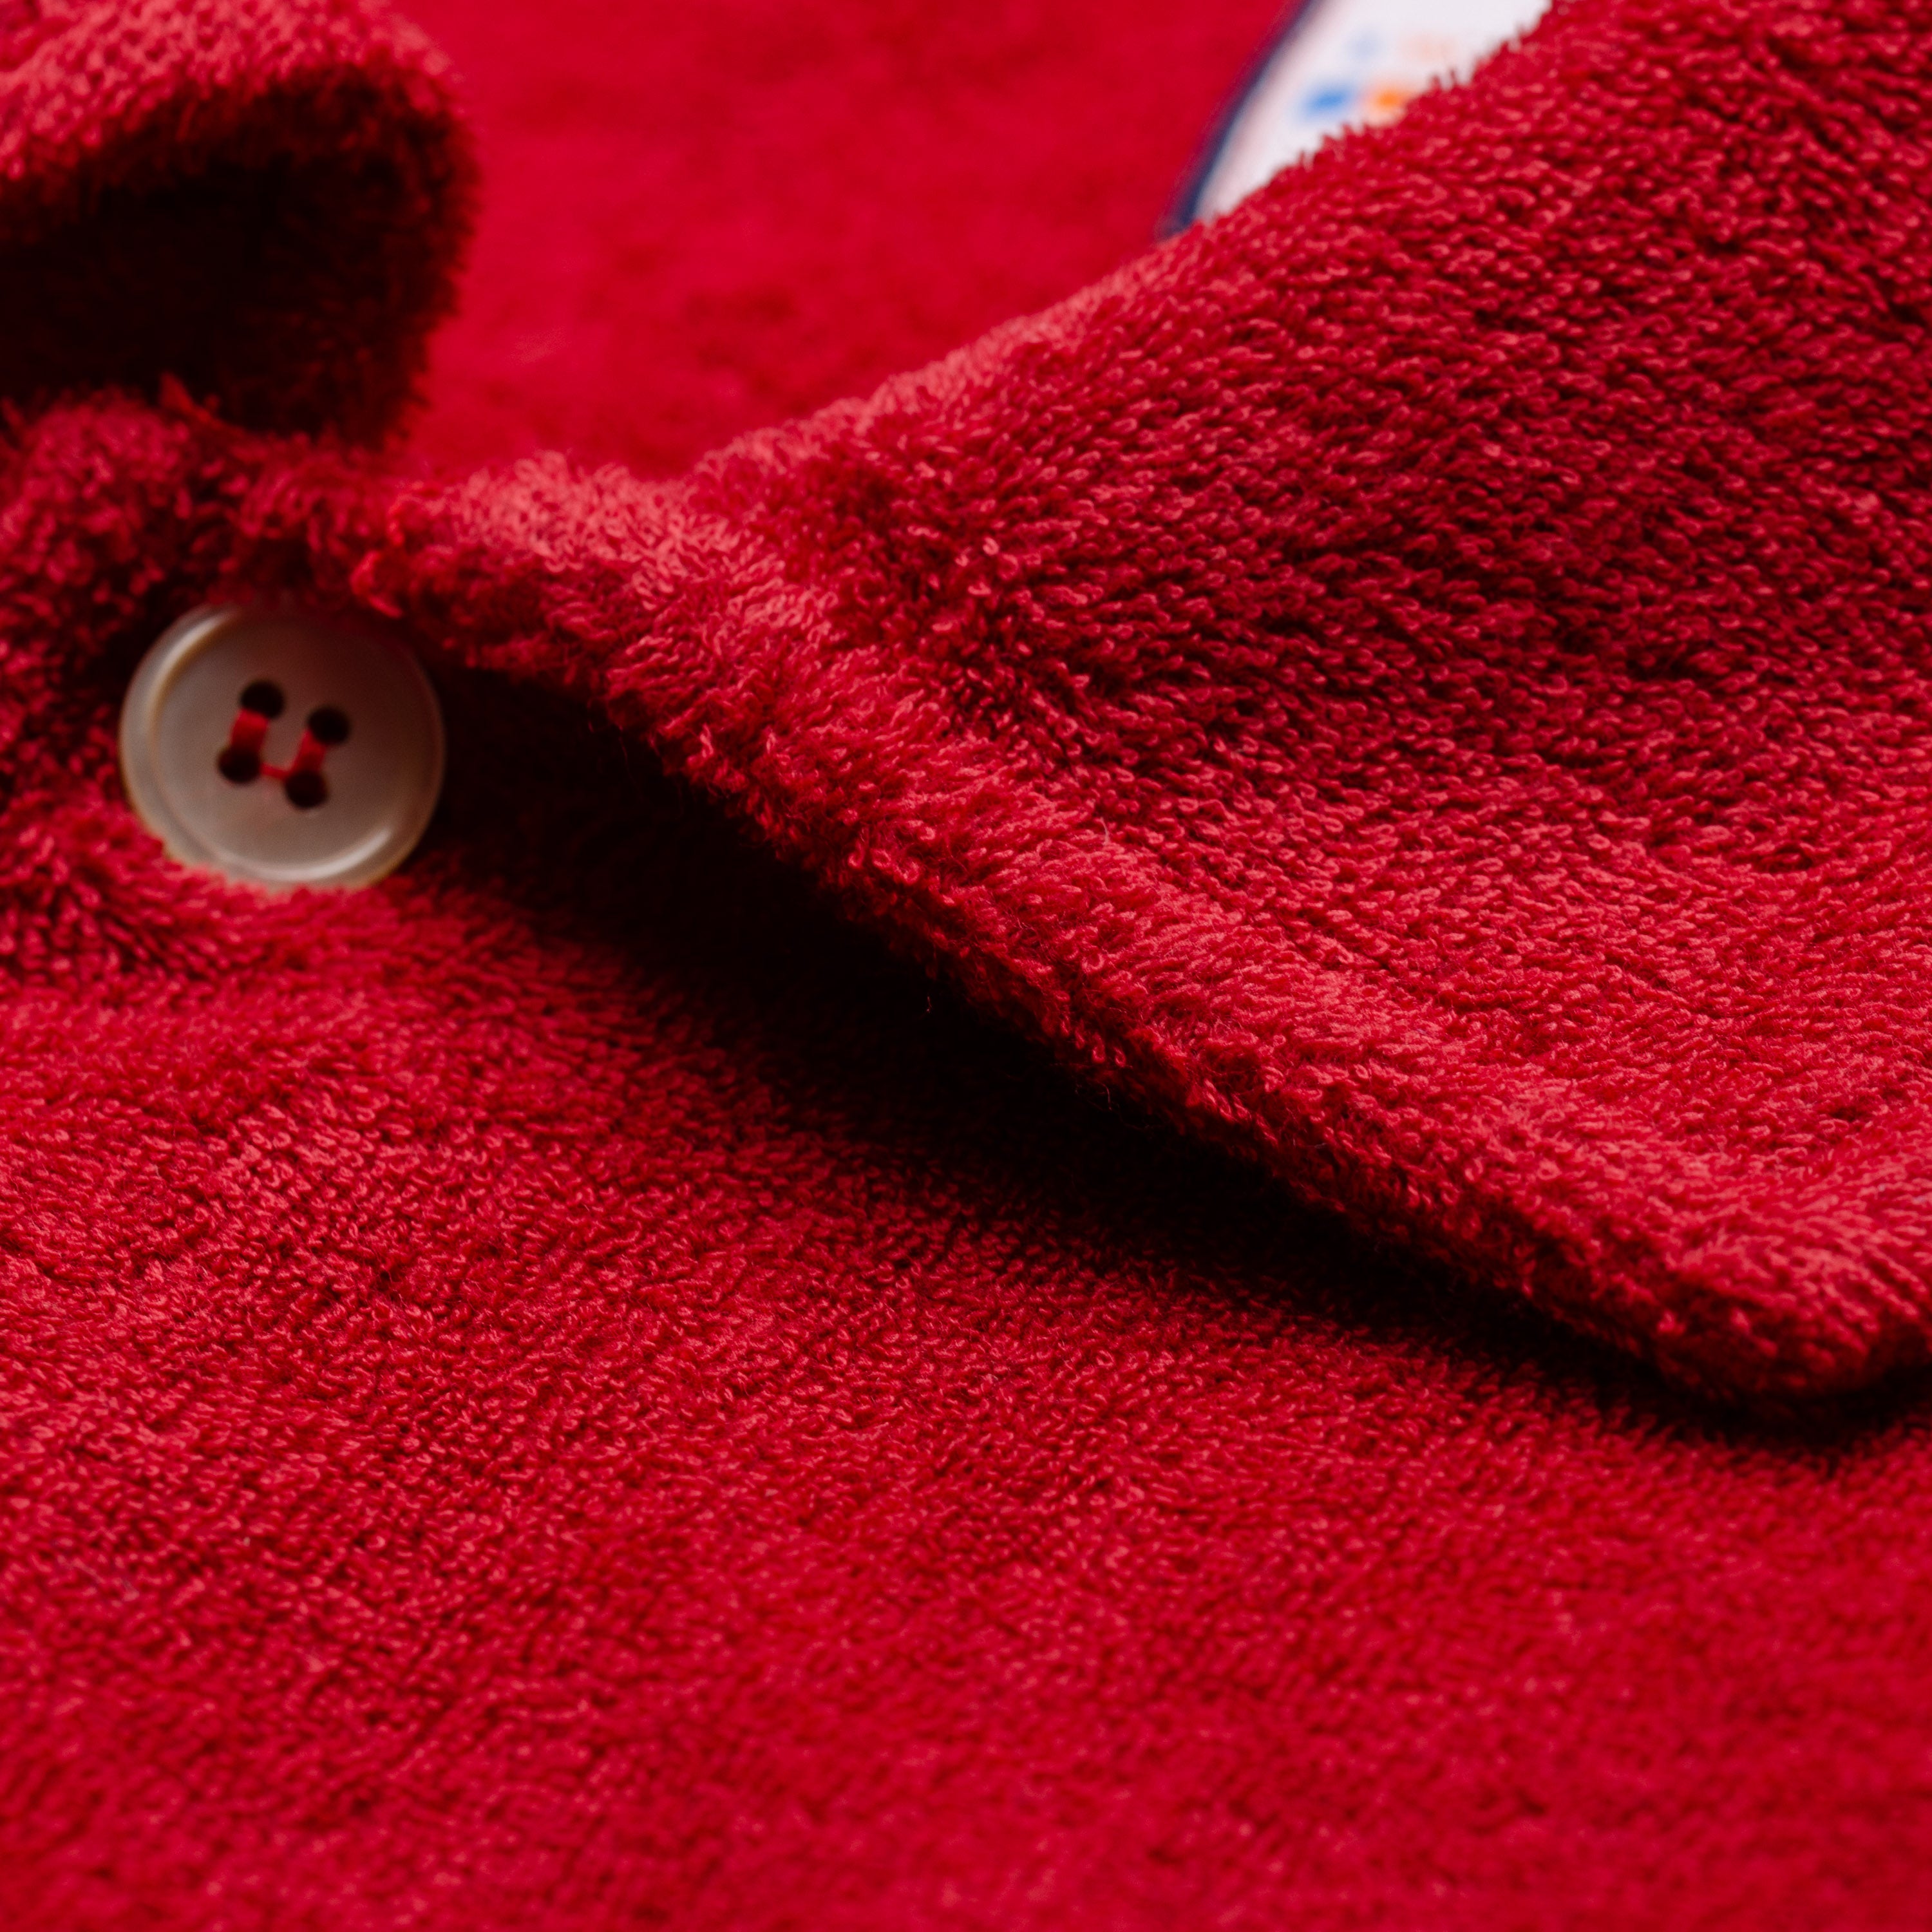 FEDELI "Mondial" Red Terry Cloth Short Sleeve Polo Shirt EU 50 NEW US M Slim Fit FEDELI